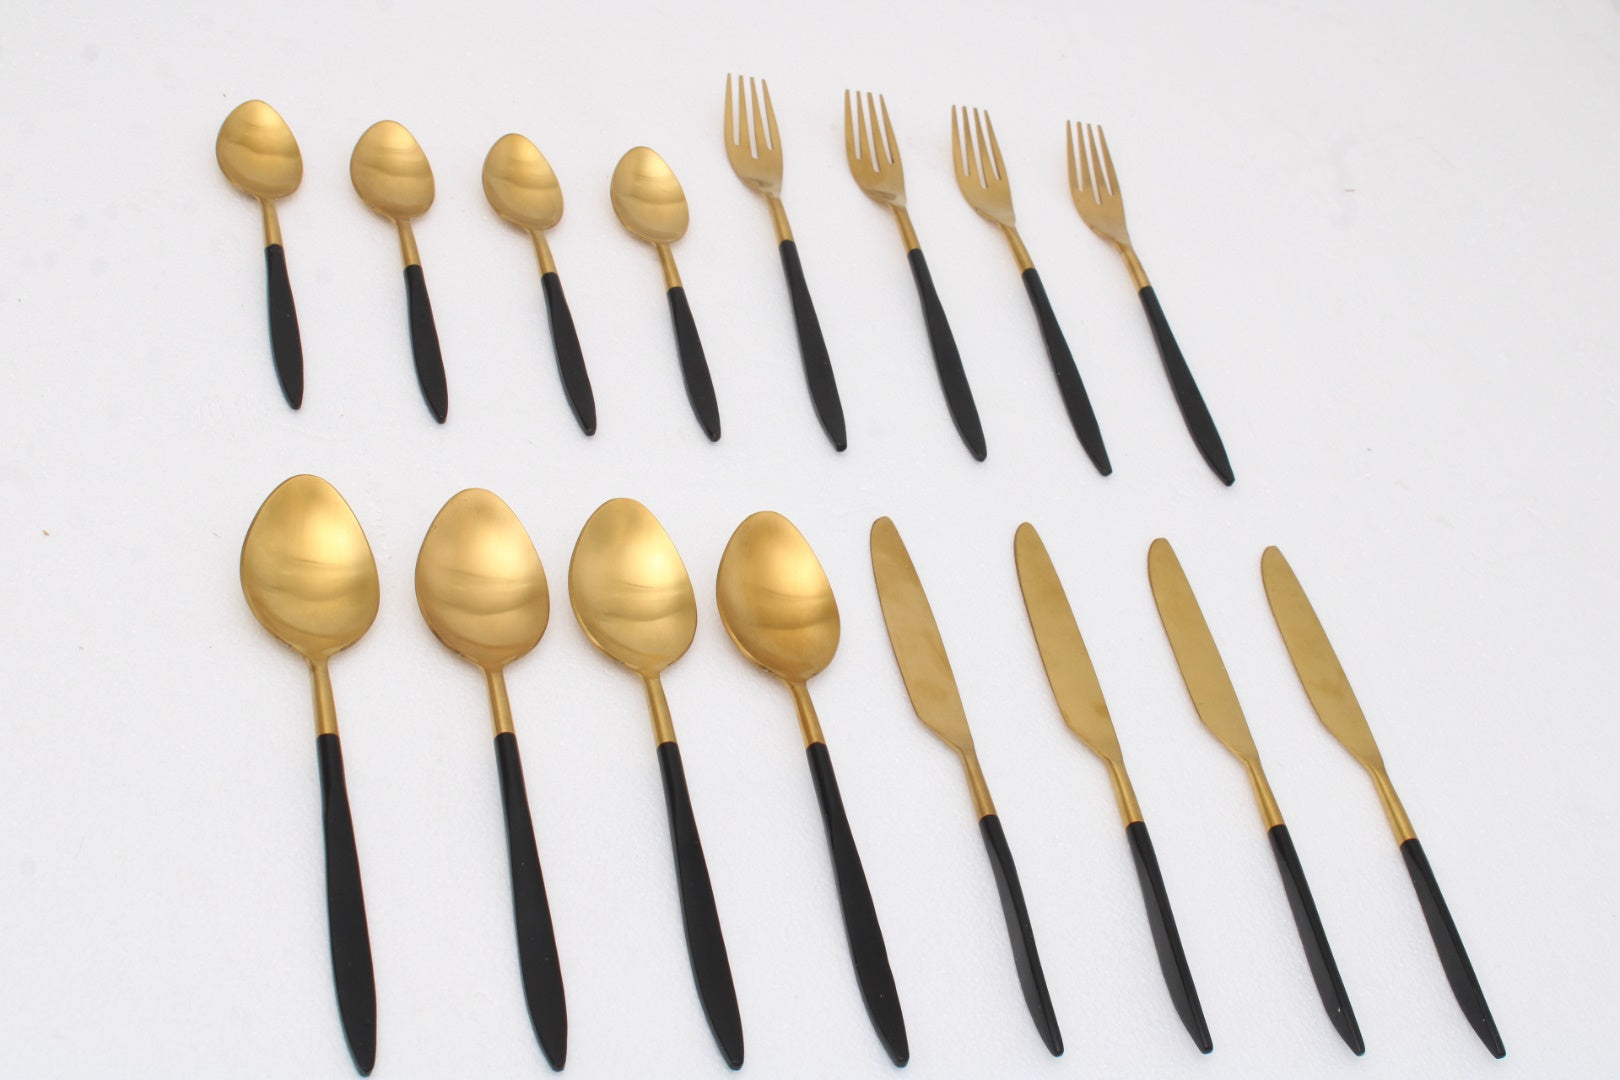 Midnight Opulence Black & Gold Cutlery Set of 16